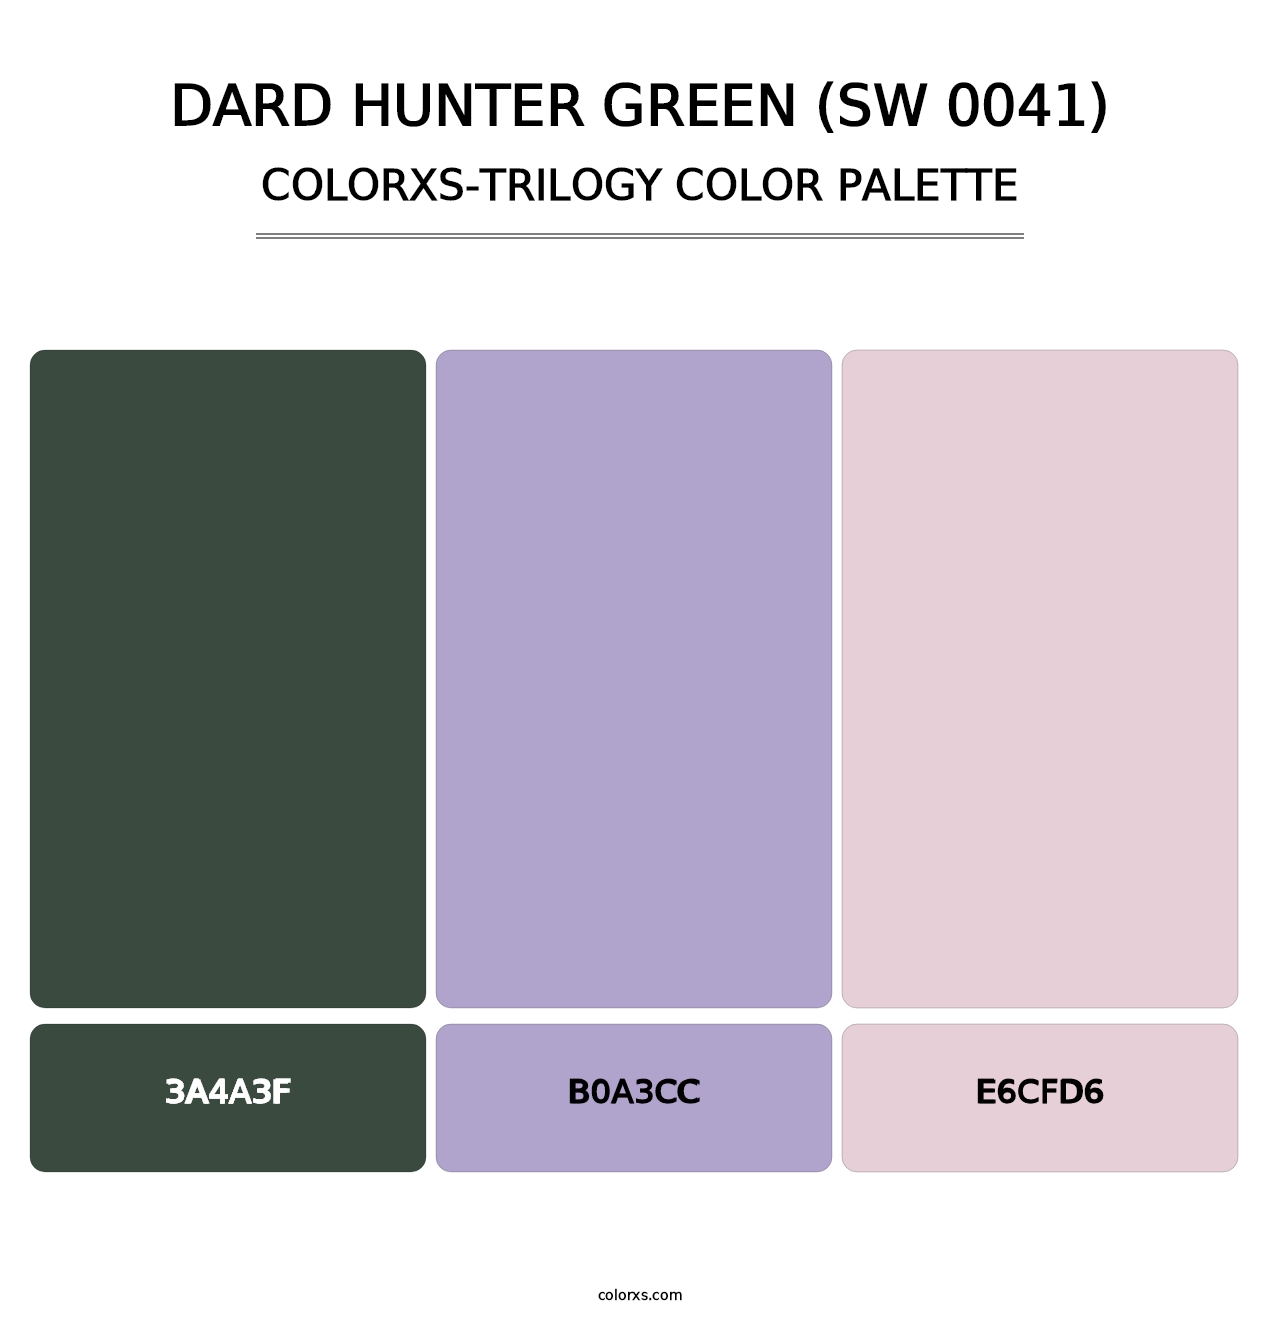 Dard Hunter Green (SW 0041) - Colorxs Trilogy Palette